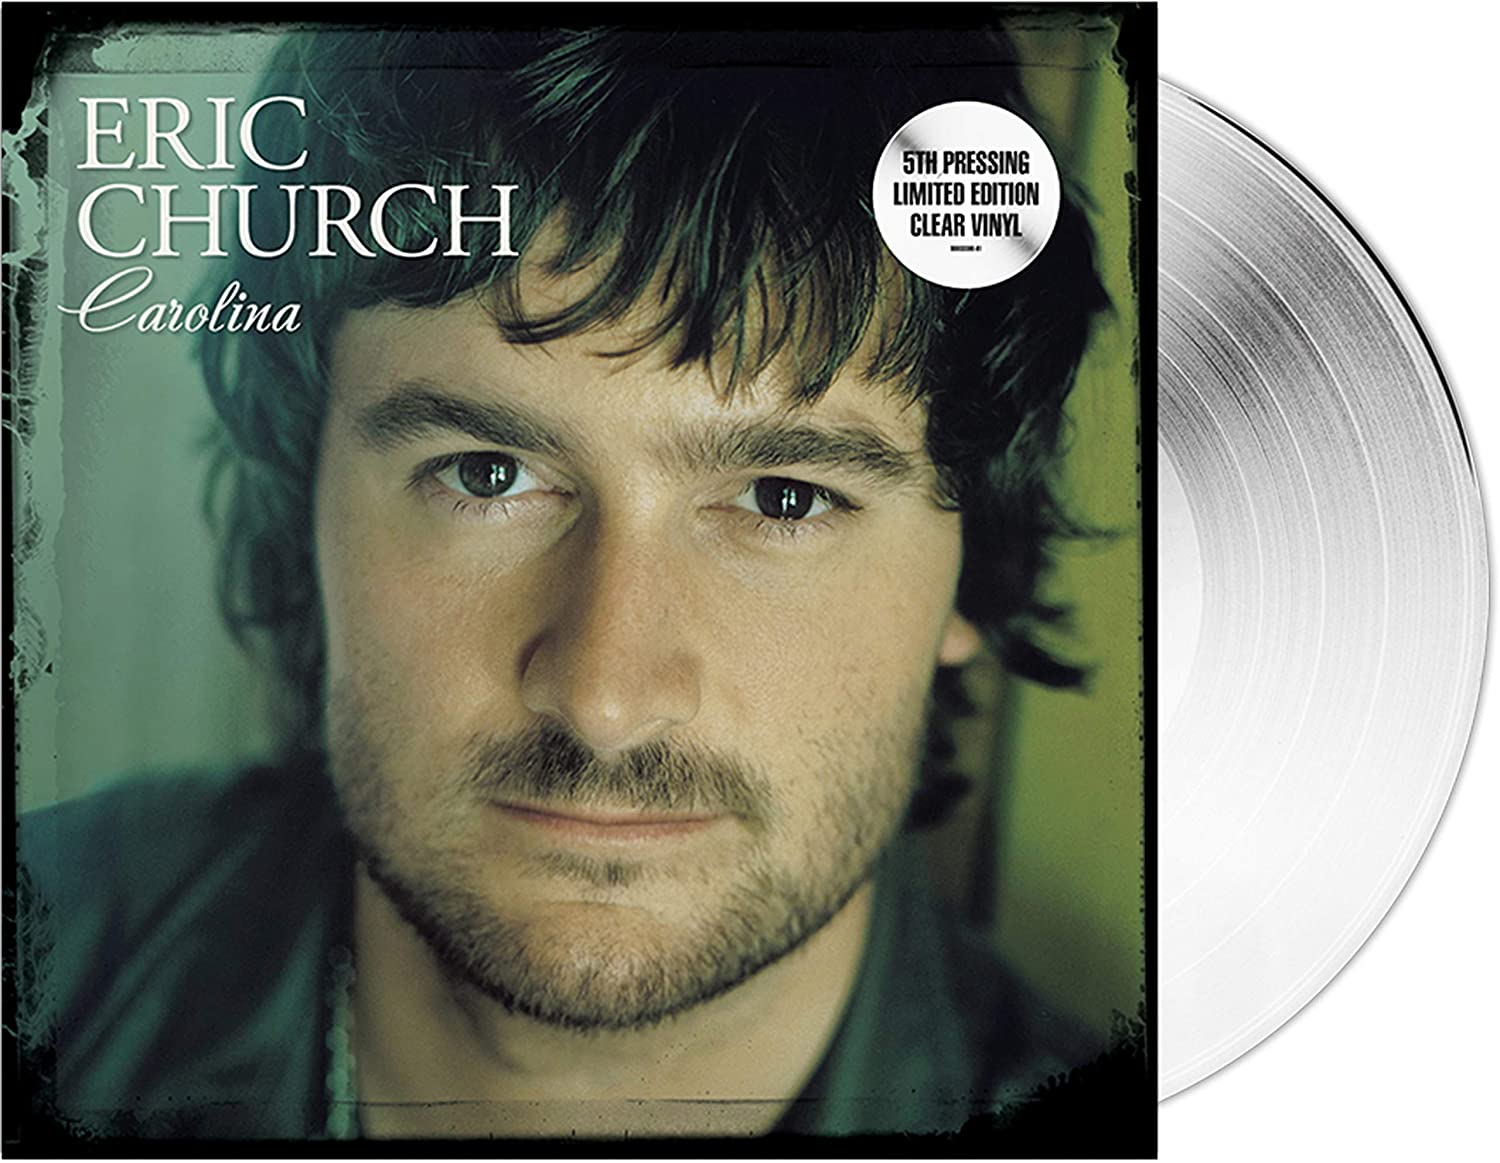 Eric Church • Carolina • 5th Pressing Limited Edition Clear Vinyl